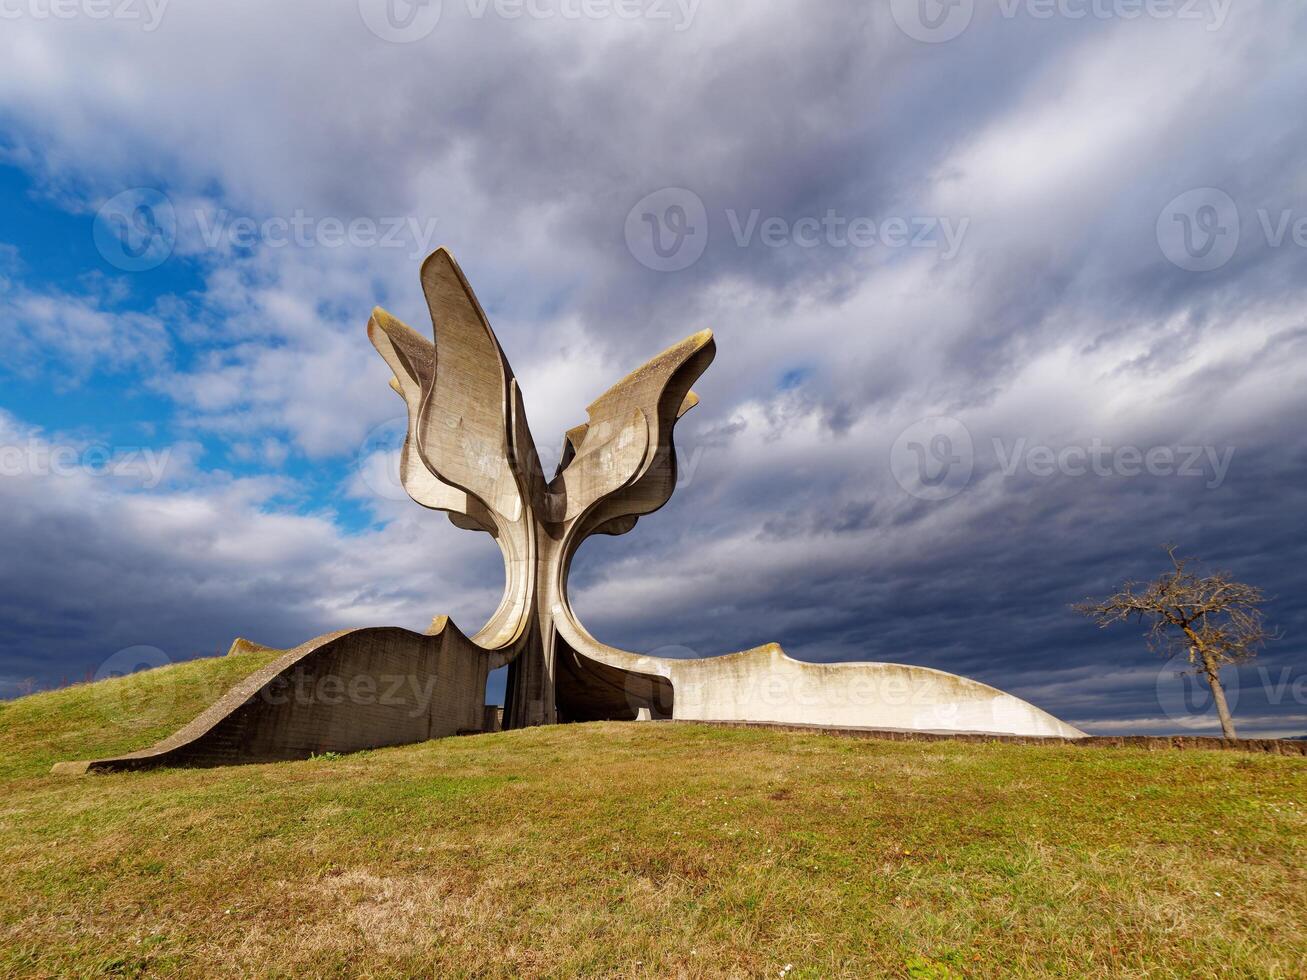 Jasenovac flower Monument or Stone Flower in Sisak Moslavina, Croatia. Yugoslav monument commemorating the struggles of the partisan during World War 2. photo